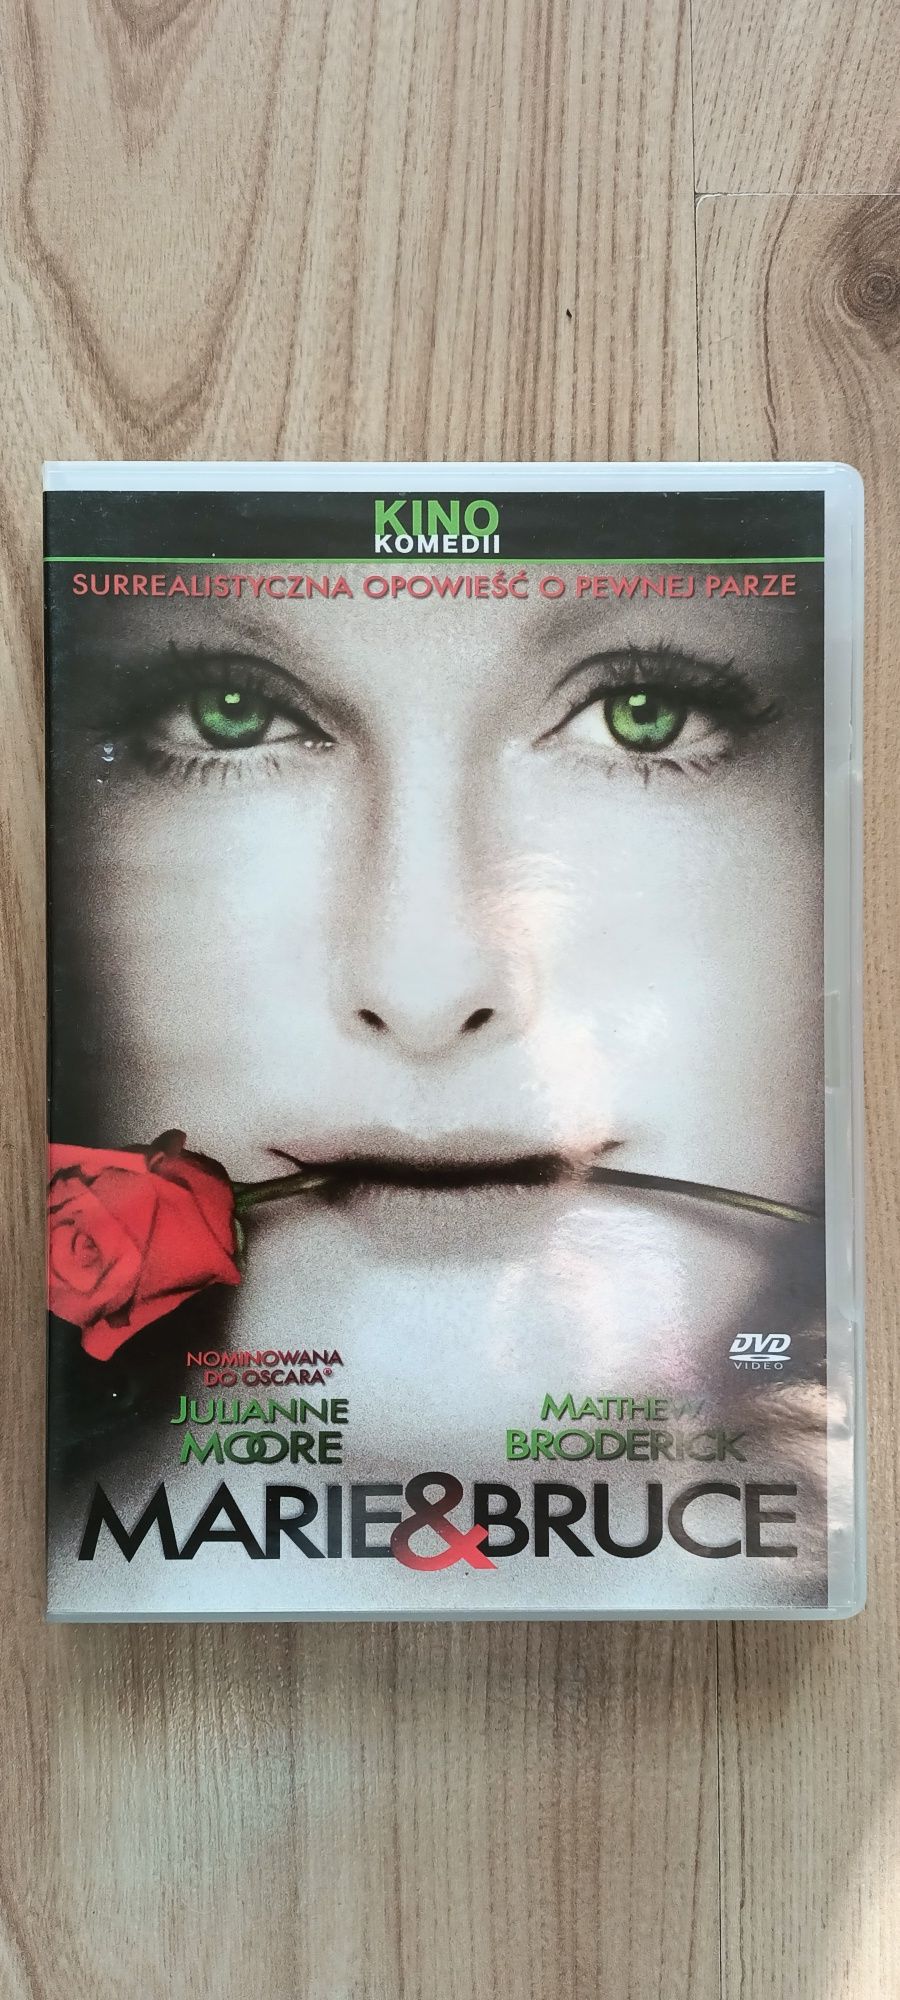 Film na DVD "Marie & Bruce"